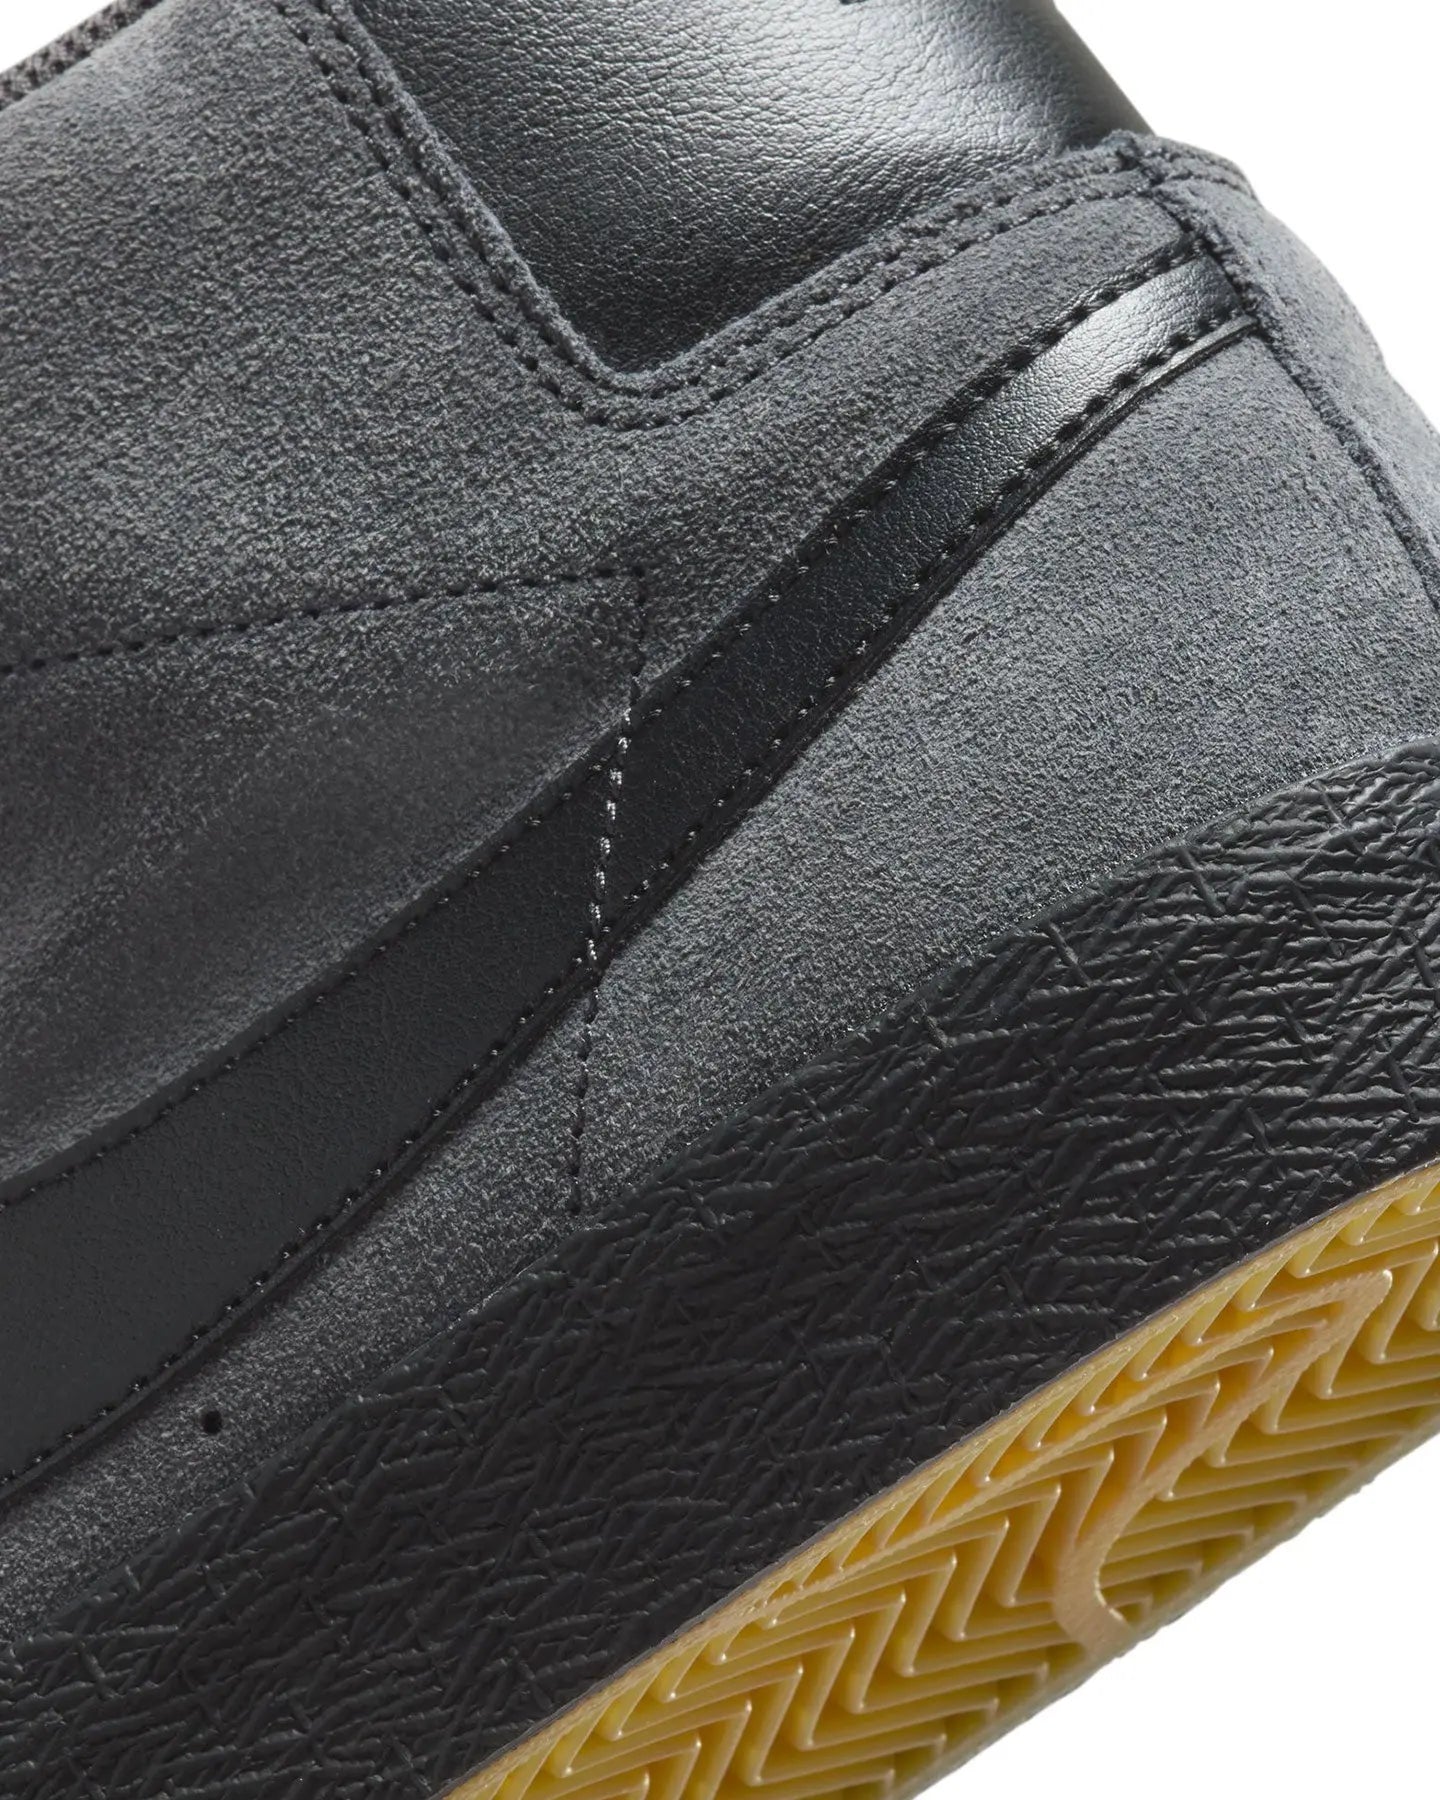 Nike SB Zoom Blazer Mid - Anthracite / Black / Black Footwear